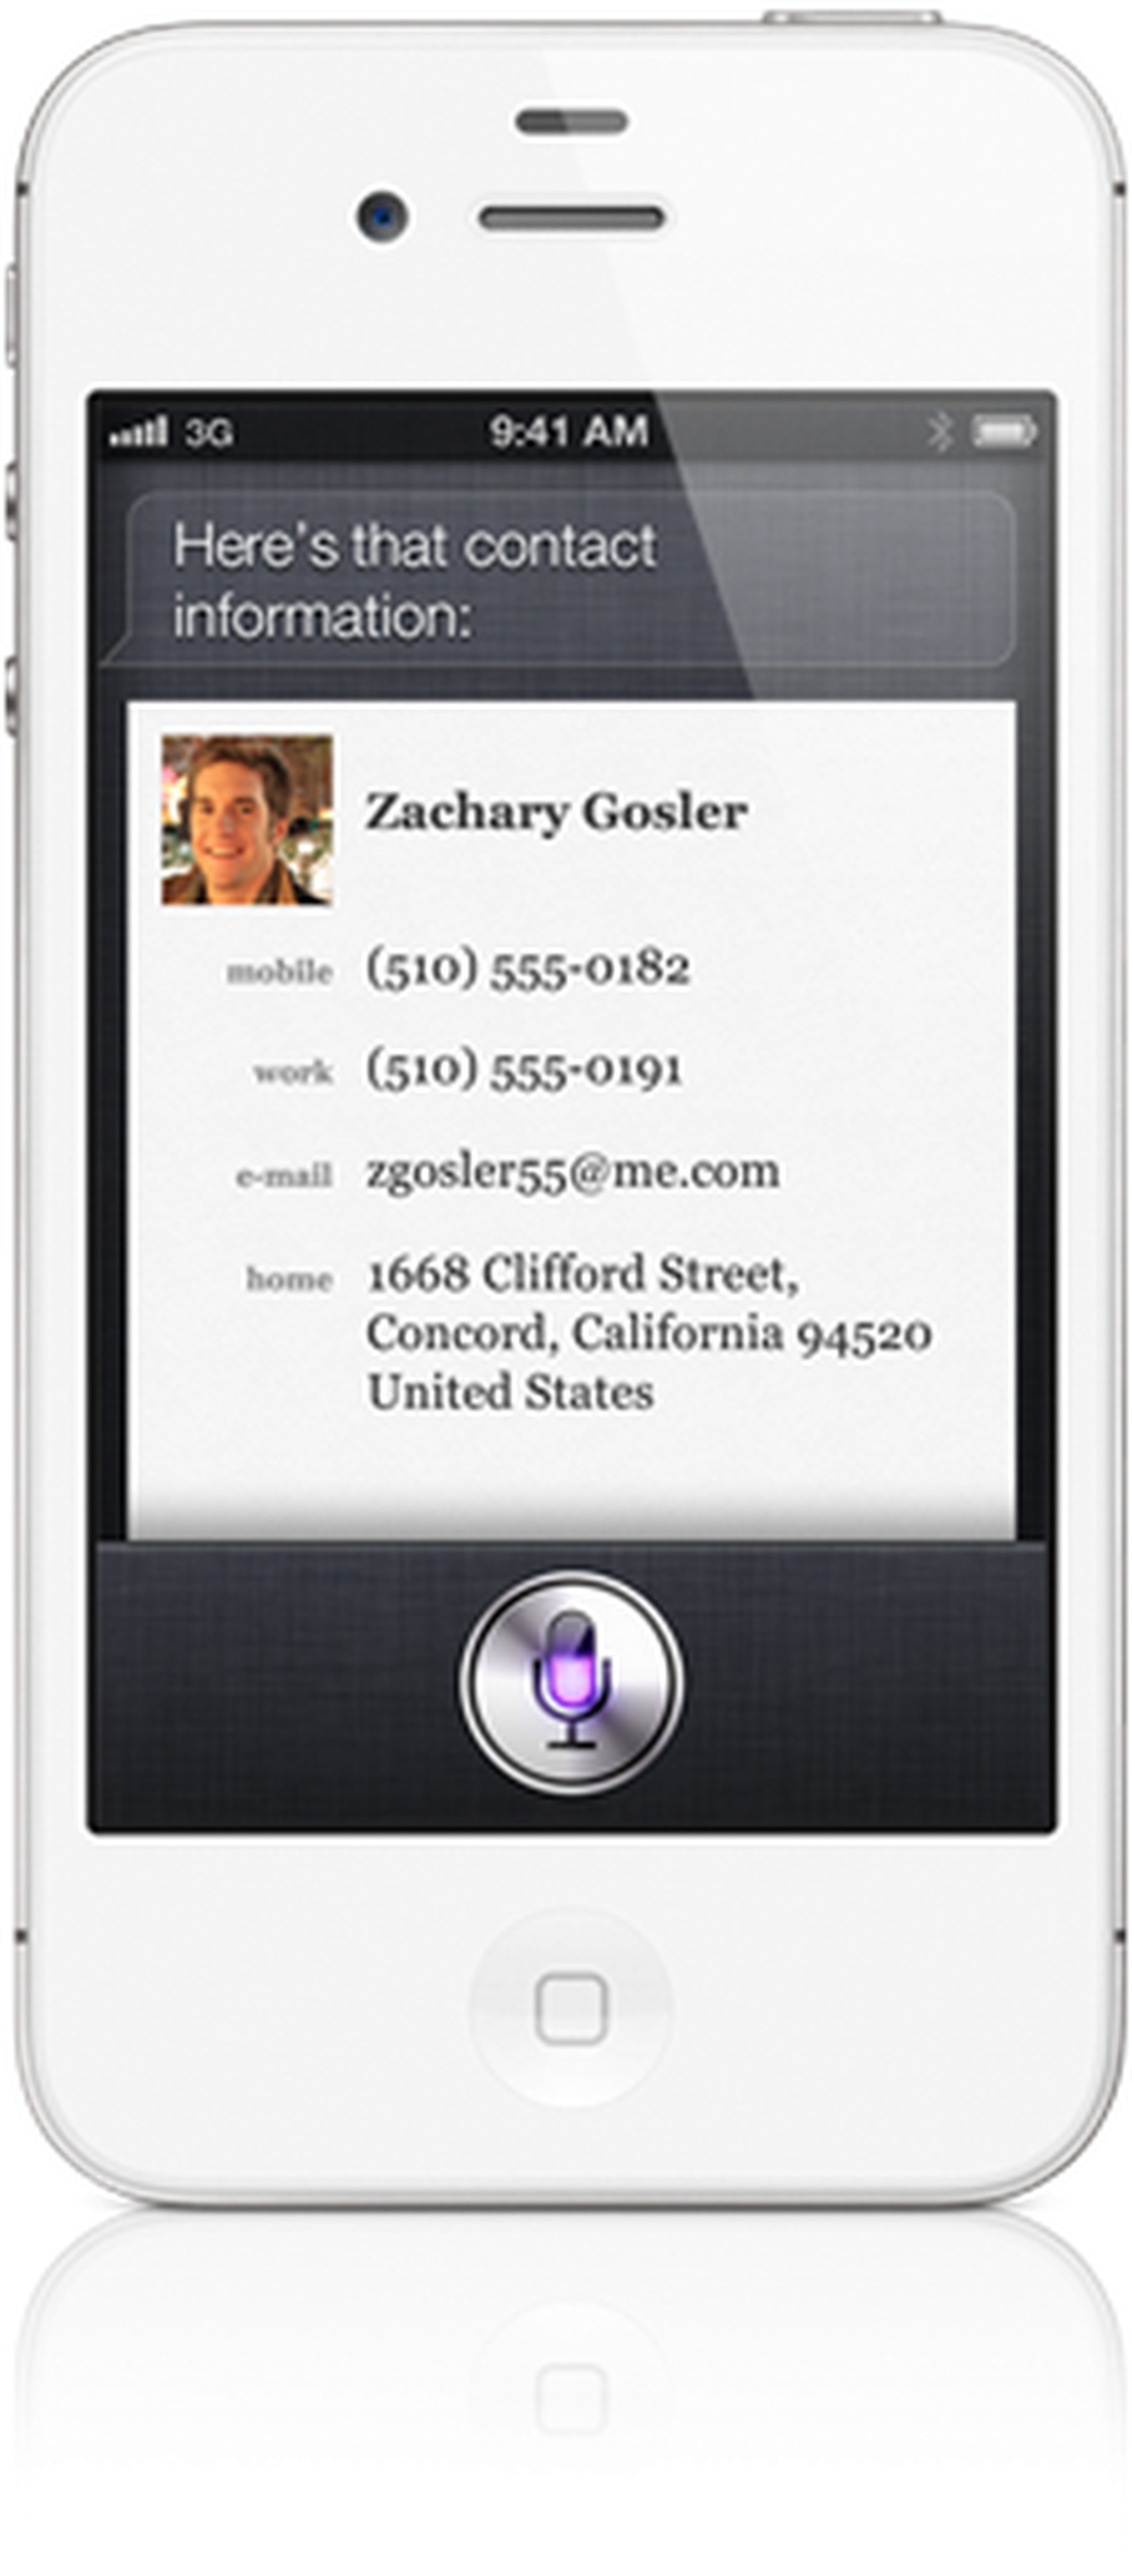 iPhone 4S Siri image gallery